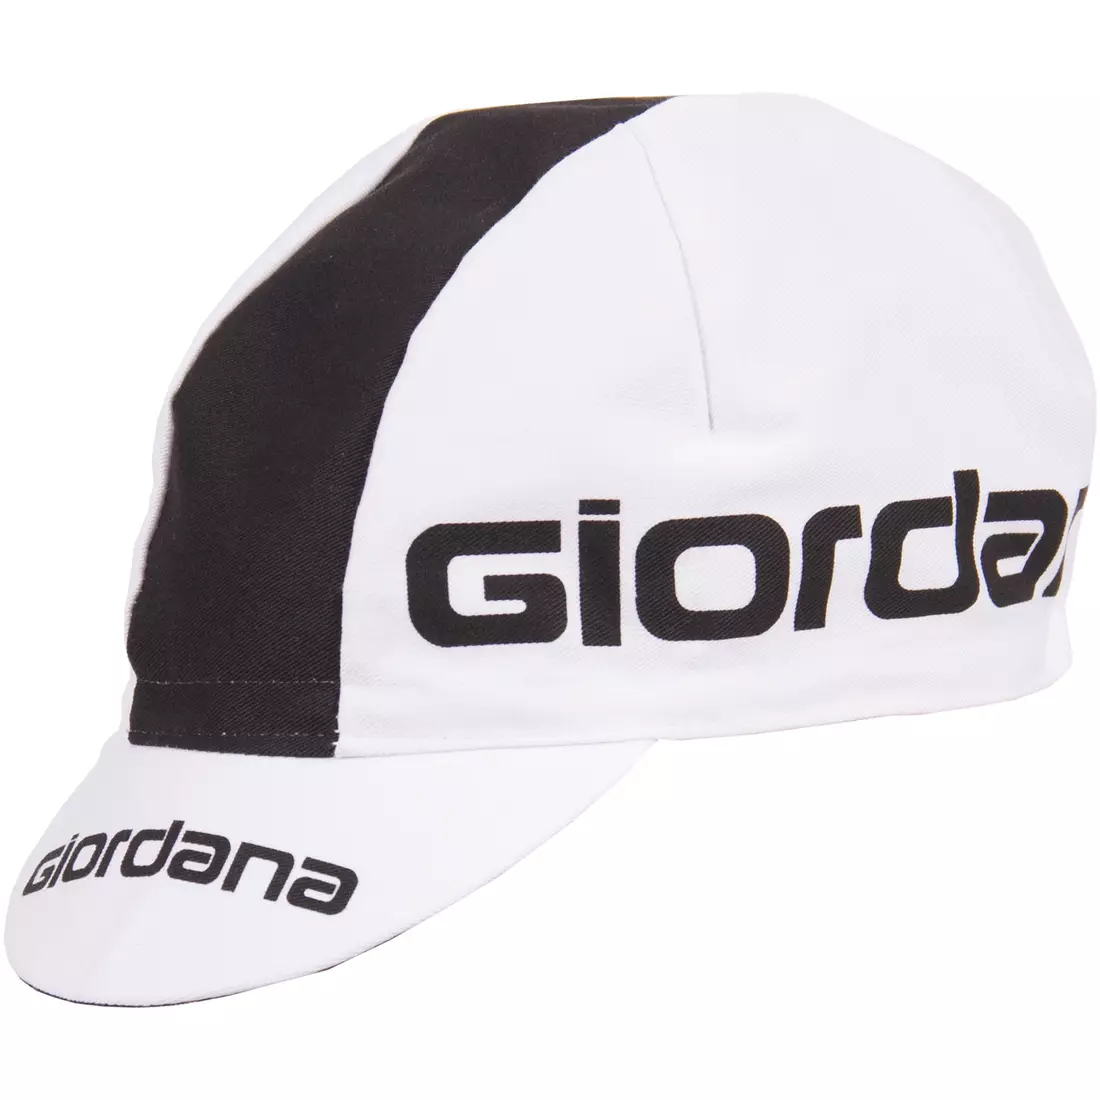 GIORDANA SS18 cycling cap - Giordana Logo - White/Black GI-S5-COCA-GIOR-WTBK one size